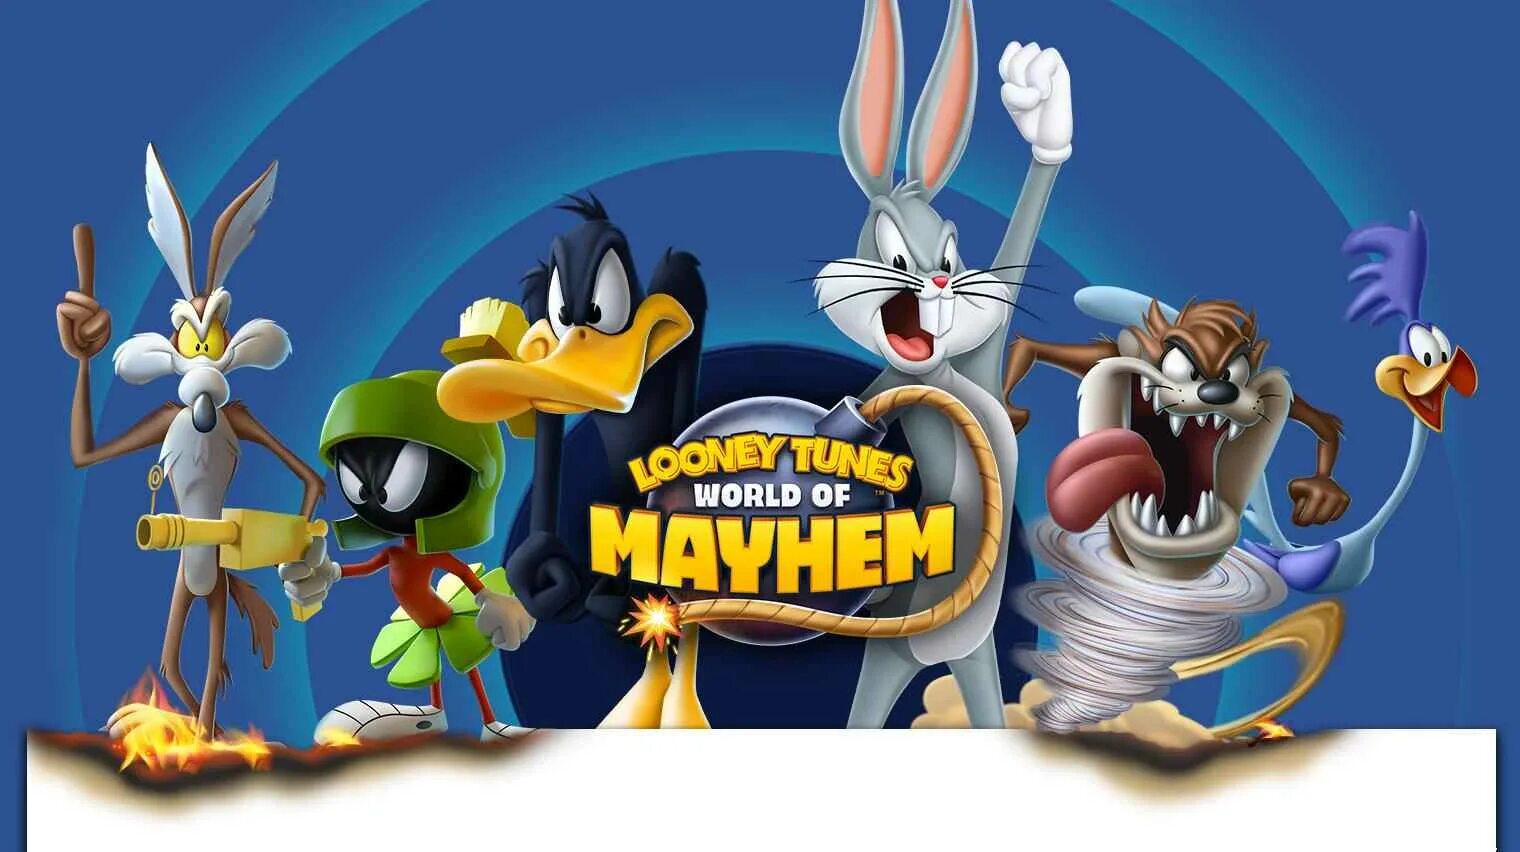 Игра Looney Tunes World of Mayhem. Looney Tunes World of Mayhem Безумный мир. Мир Луни Тюнз. Игра Луни Тюнз Безумный мир. Looney tunes безумный